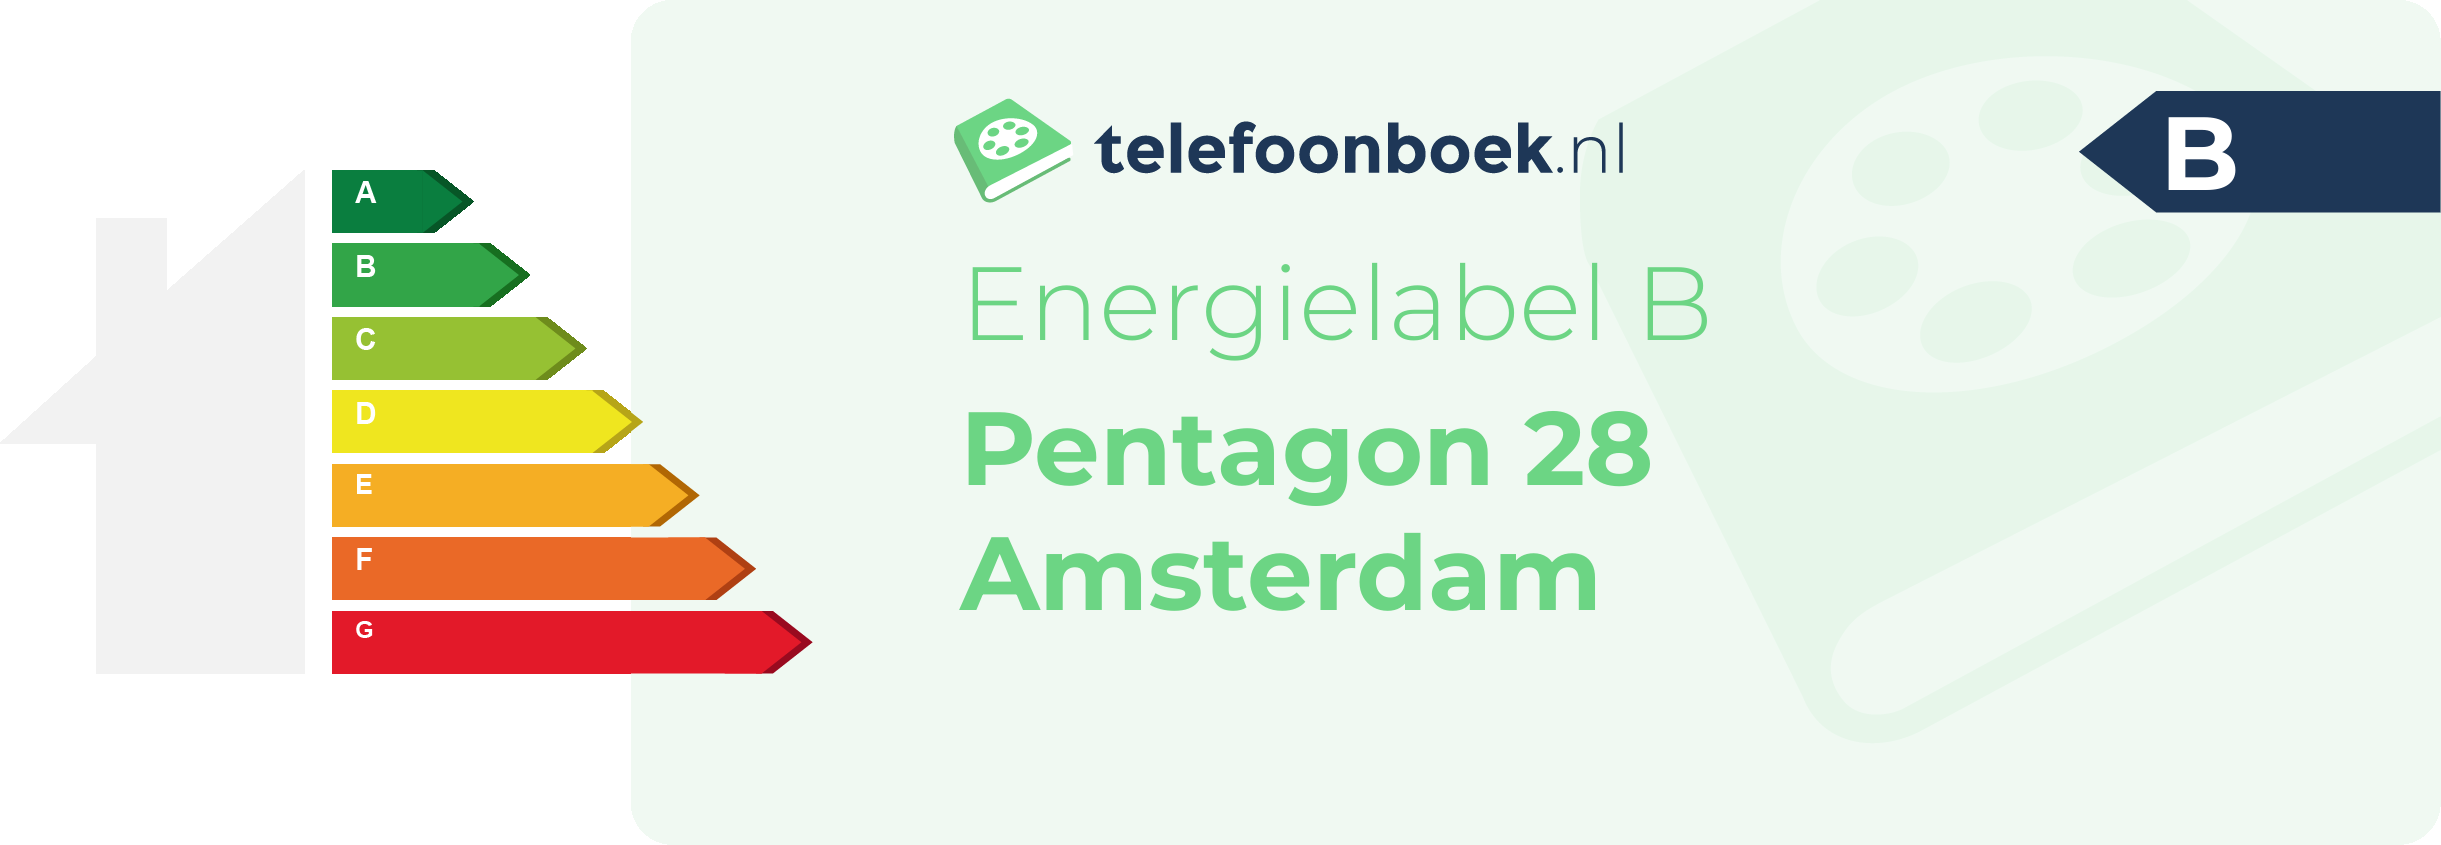 Energielabel Pentagon 28 Amsterdam